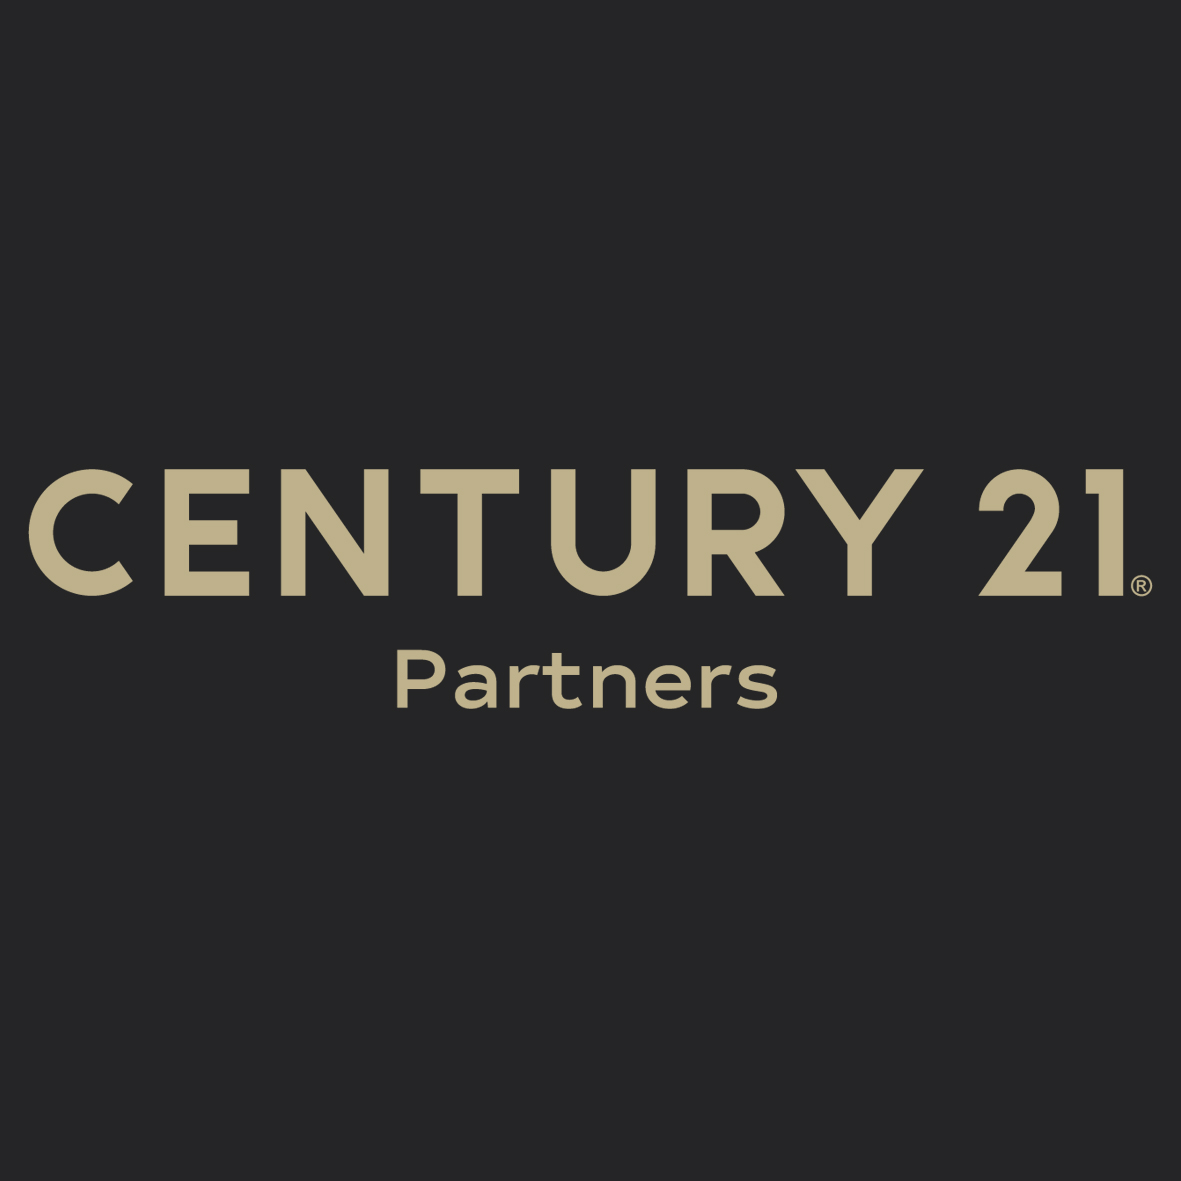 CENTURY 21 Partners